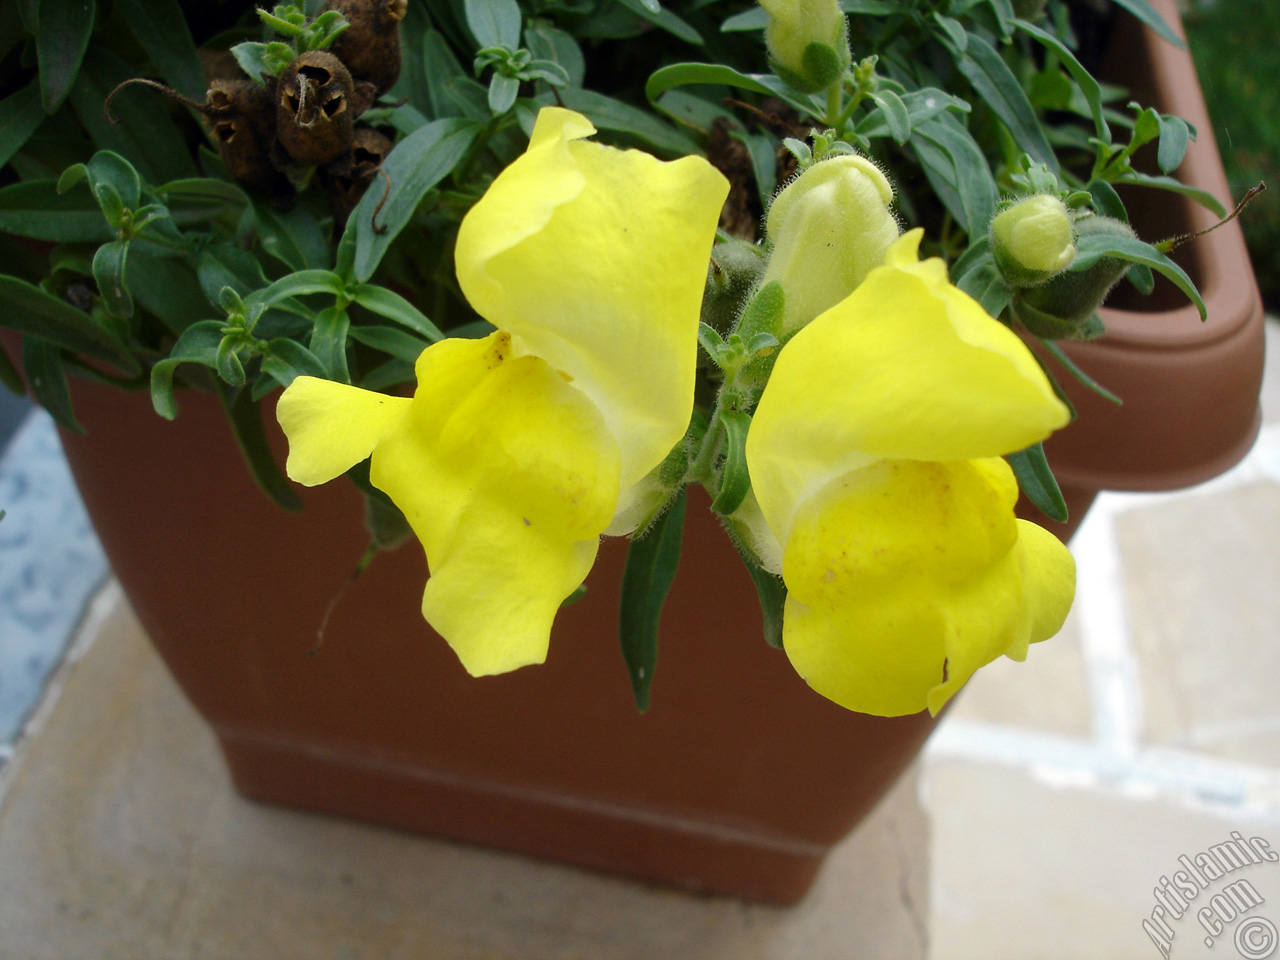 Yellow Snapdragon flower.
